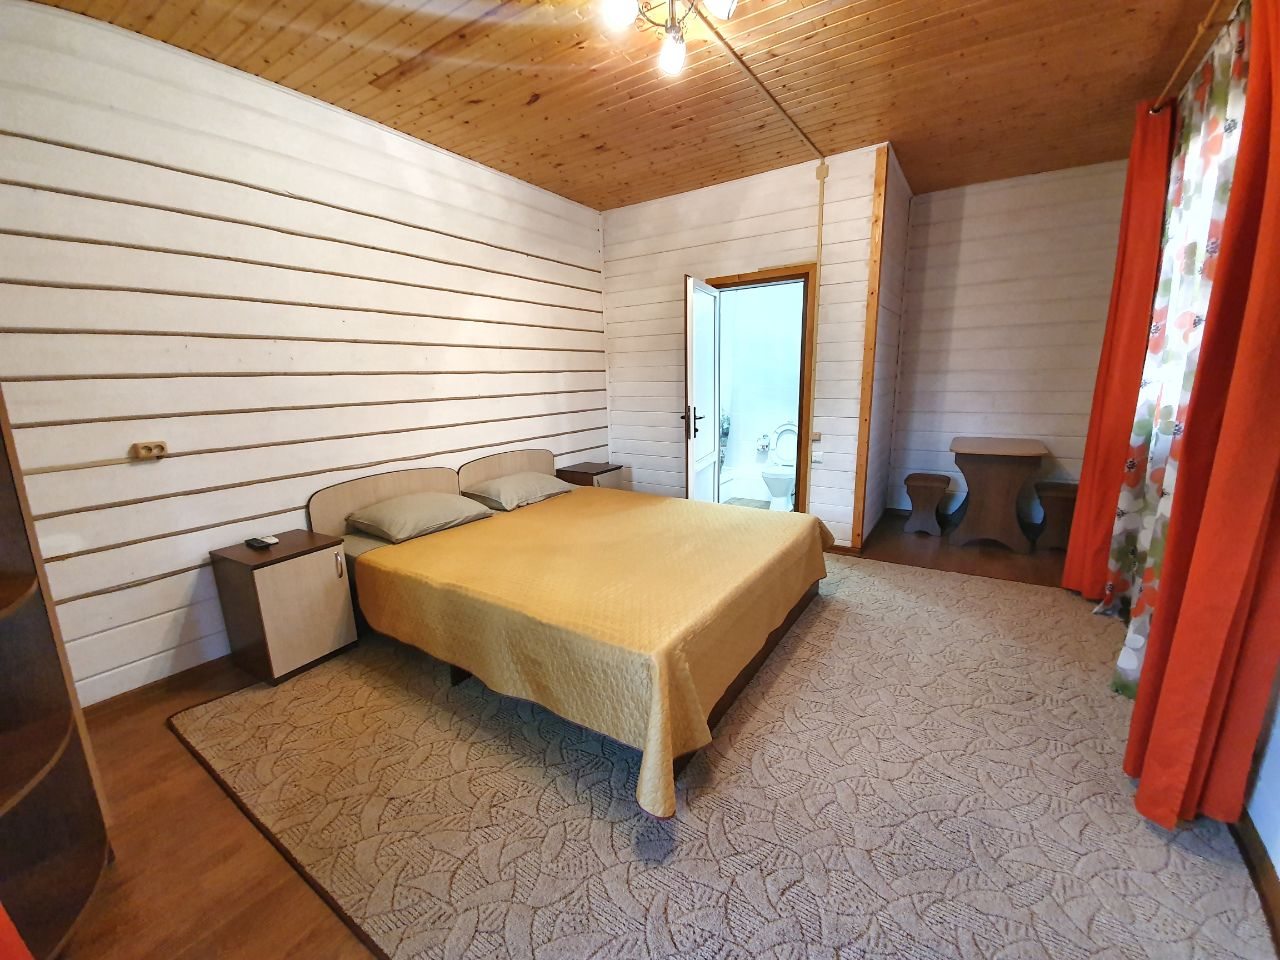 Двухместный (Двухместный номер, две односпальные кровати 90х220) гостевого дома Мама джан, Архипо-Осиповка